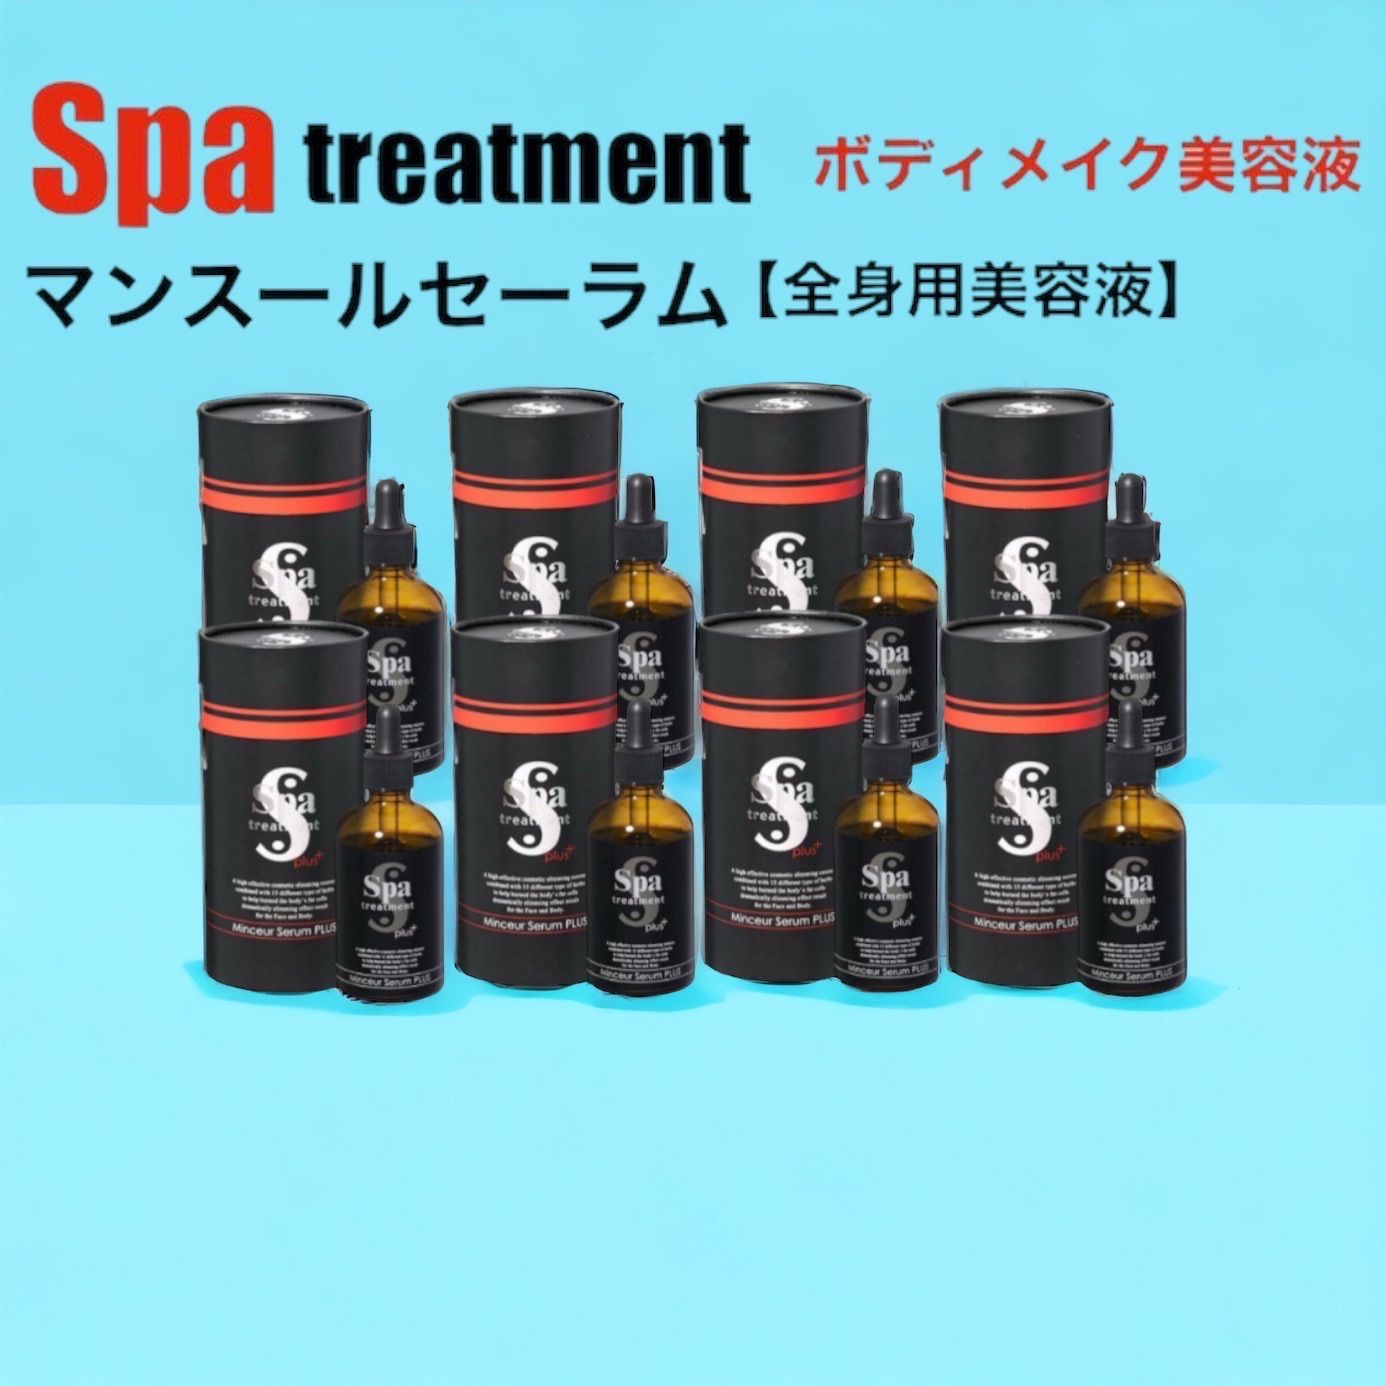 Spa treatment マンスールセーラムPLUS 100ml - メイク道具・化粧小物